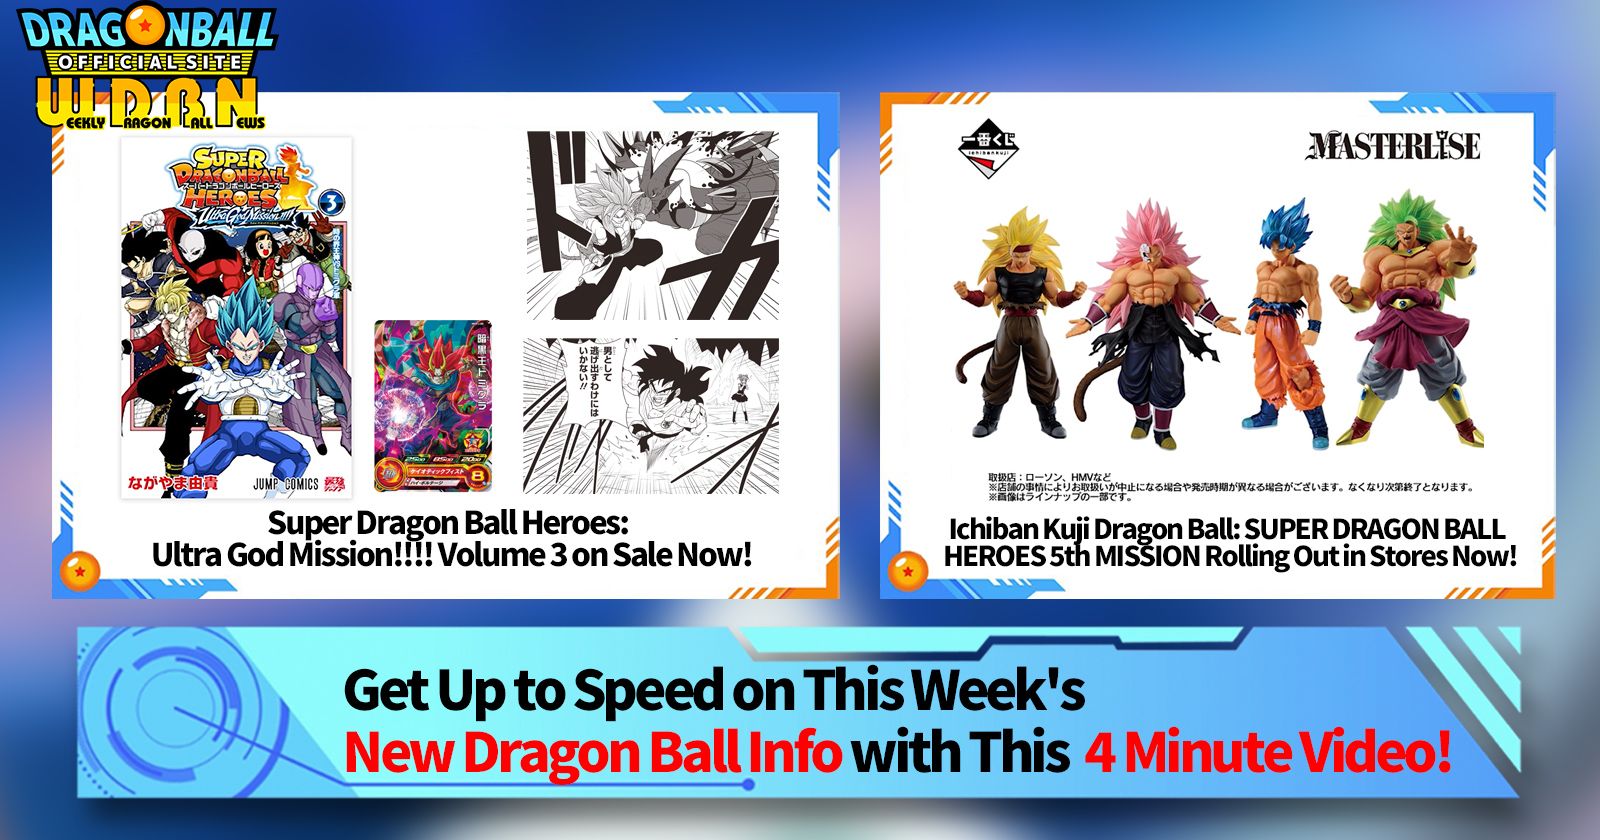 When do you think we'll get an update on dbs season 2? : r/Dragonballsuper